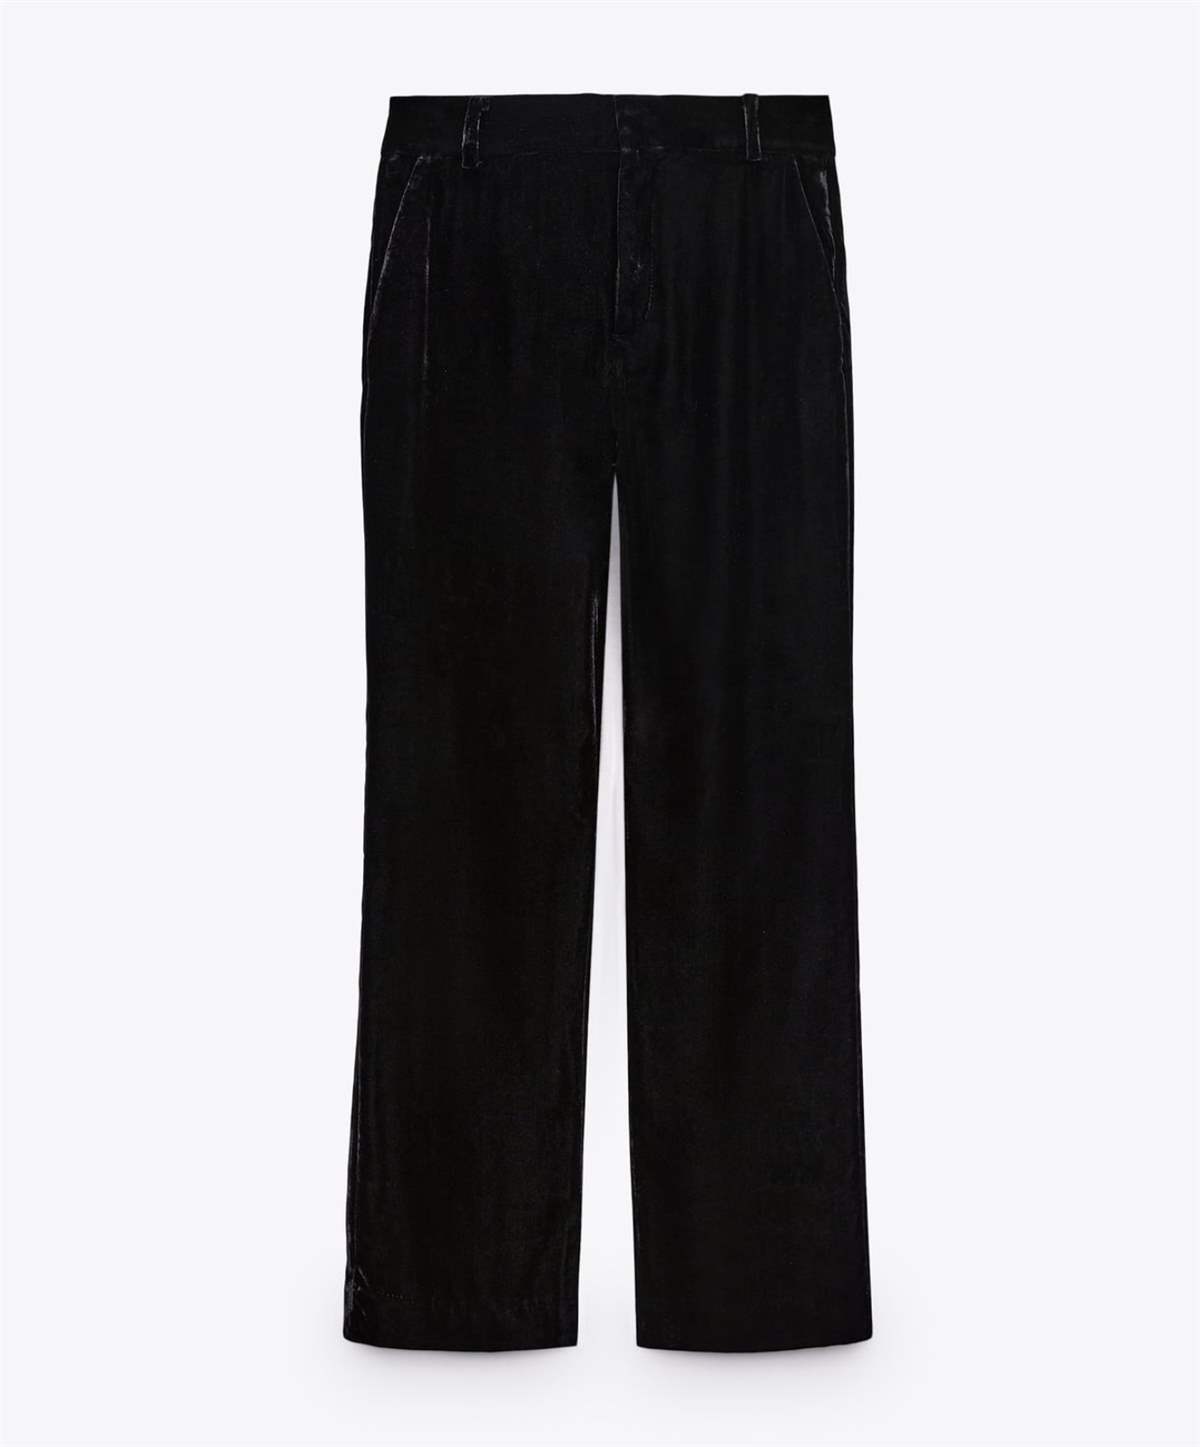 Pantalones negros de Zara